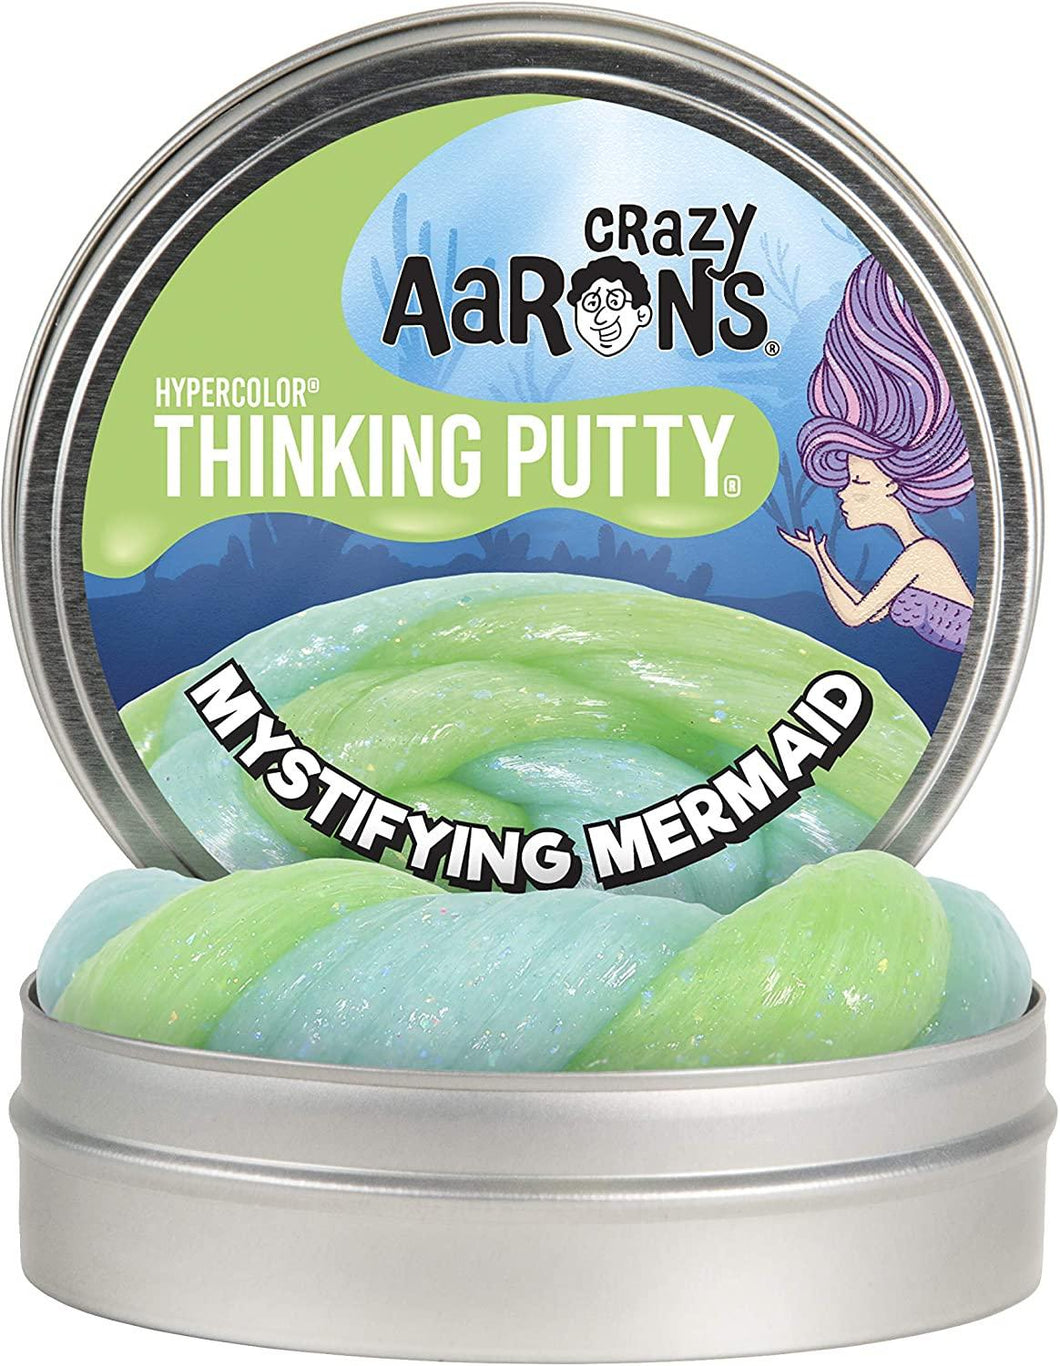 Thinking Putty - Mystifying Mermaid 4